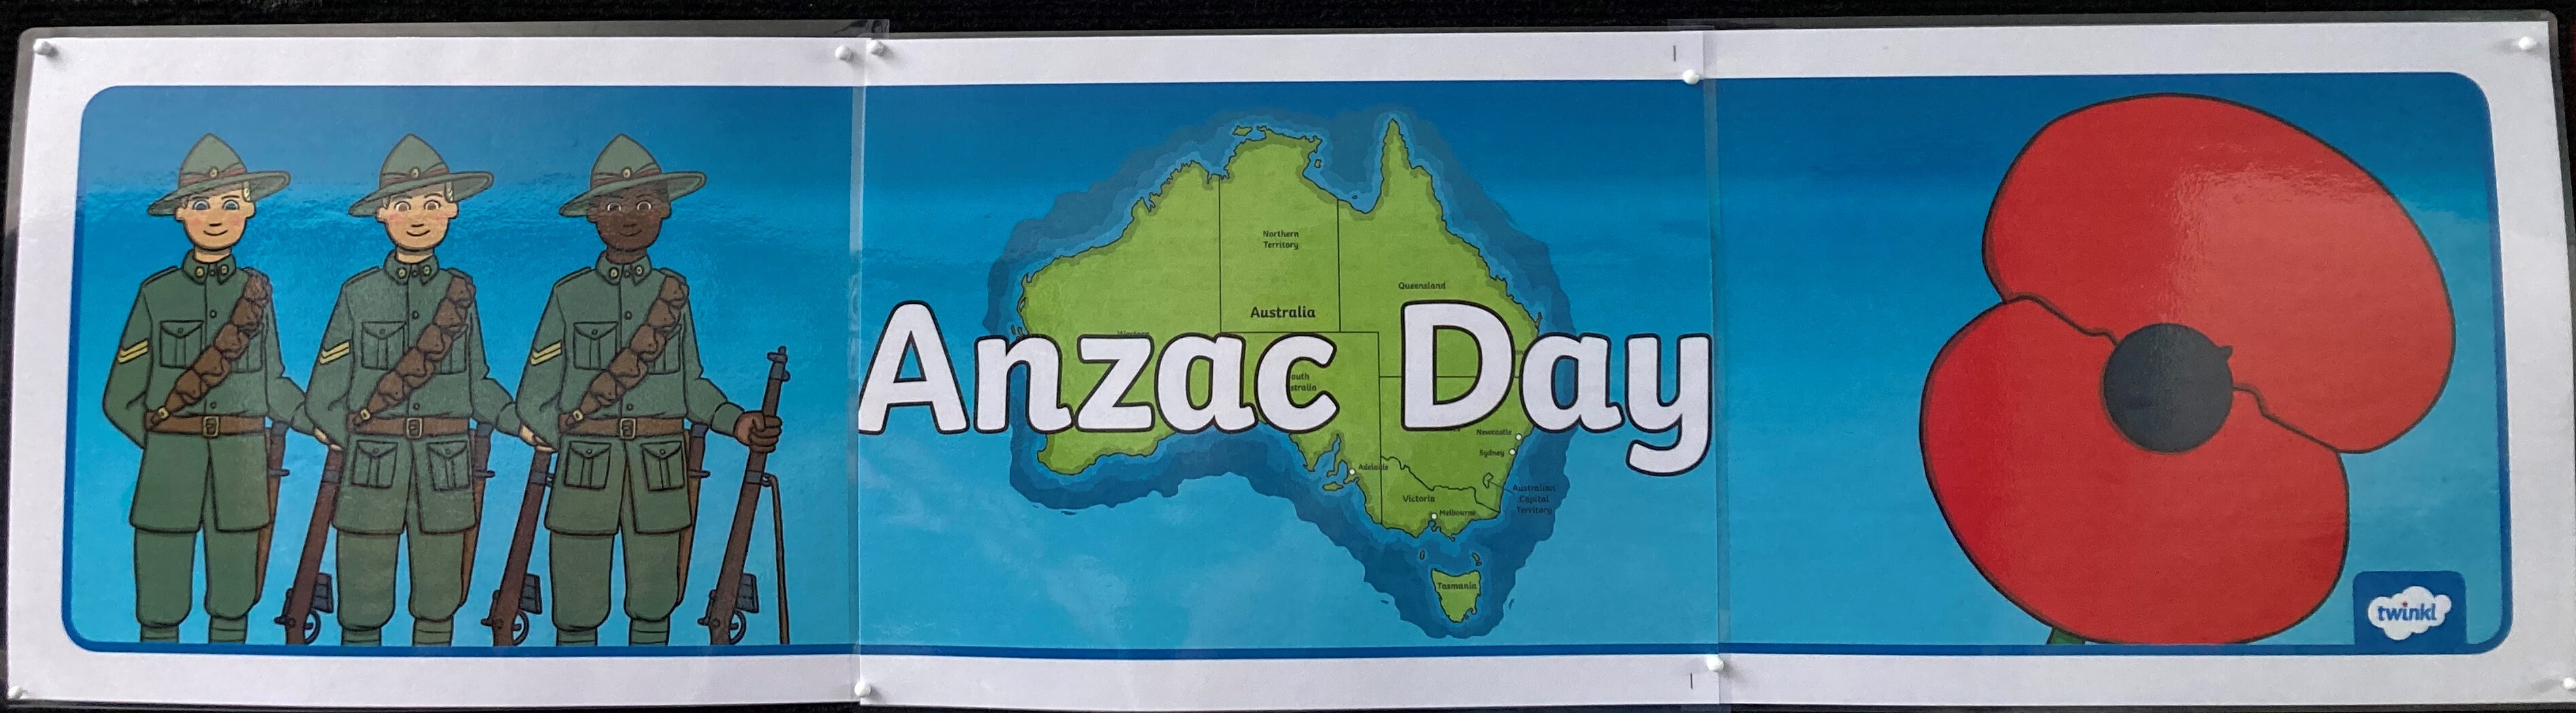 anzac banner